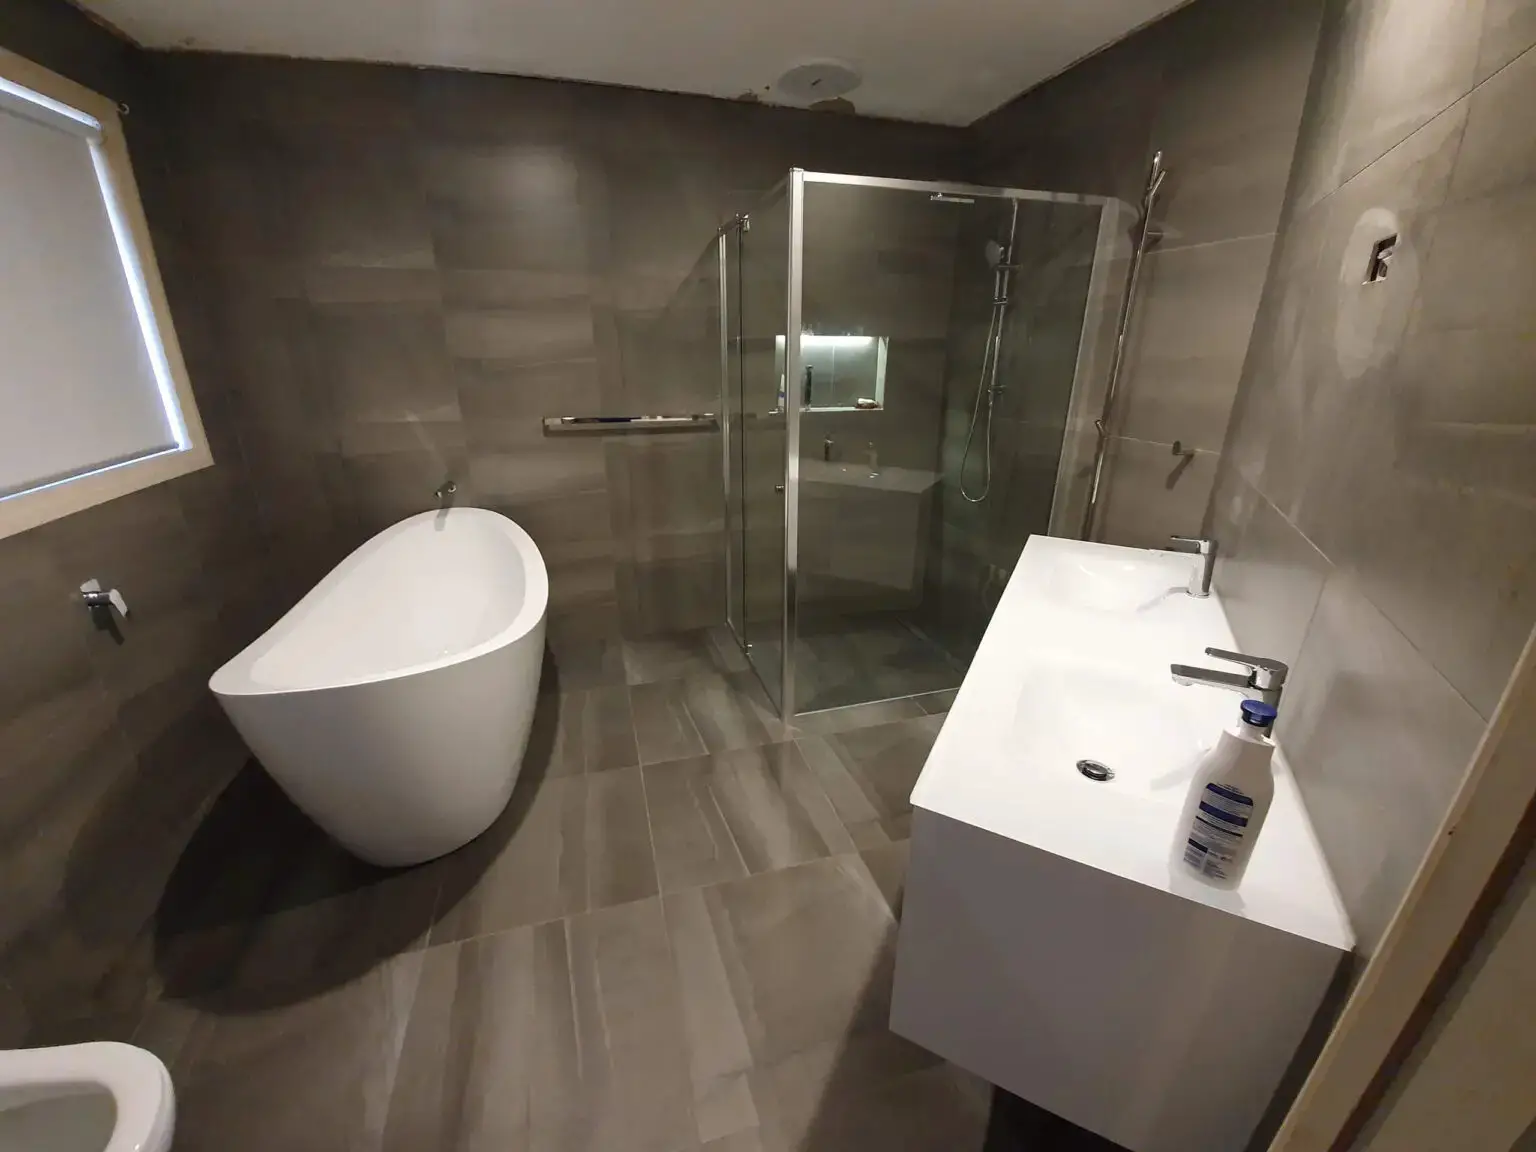 Bathroom-tiled-600-x-600-Porcelian-tile-Lapparto-grey-look--1536x1152